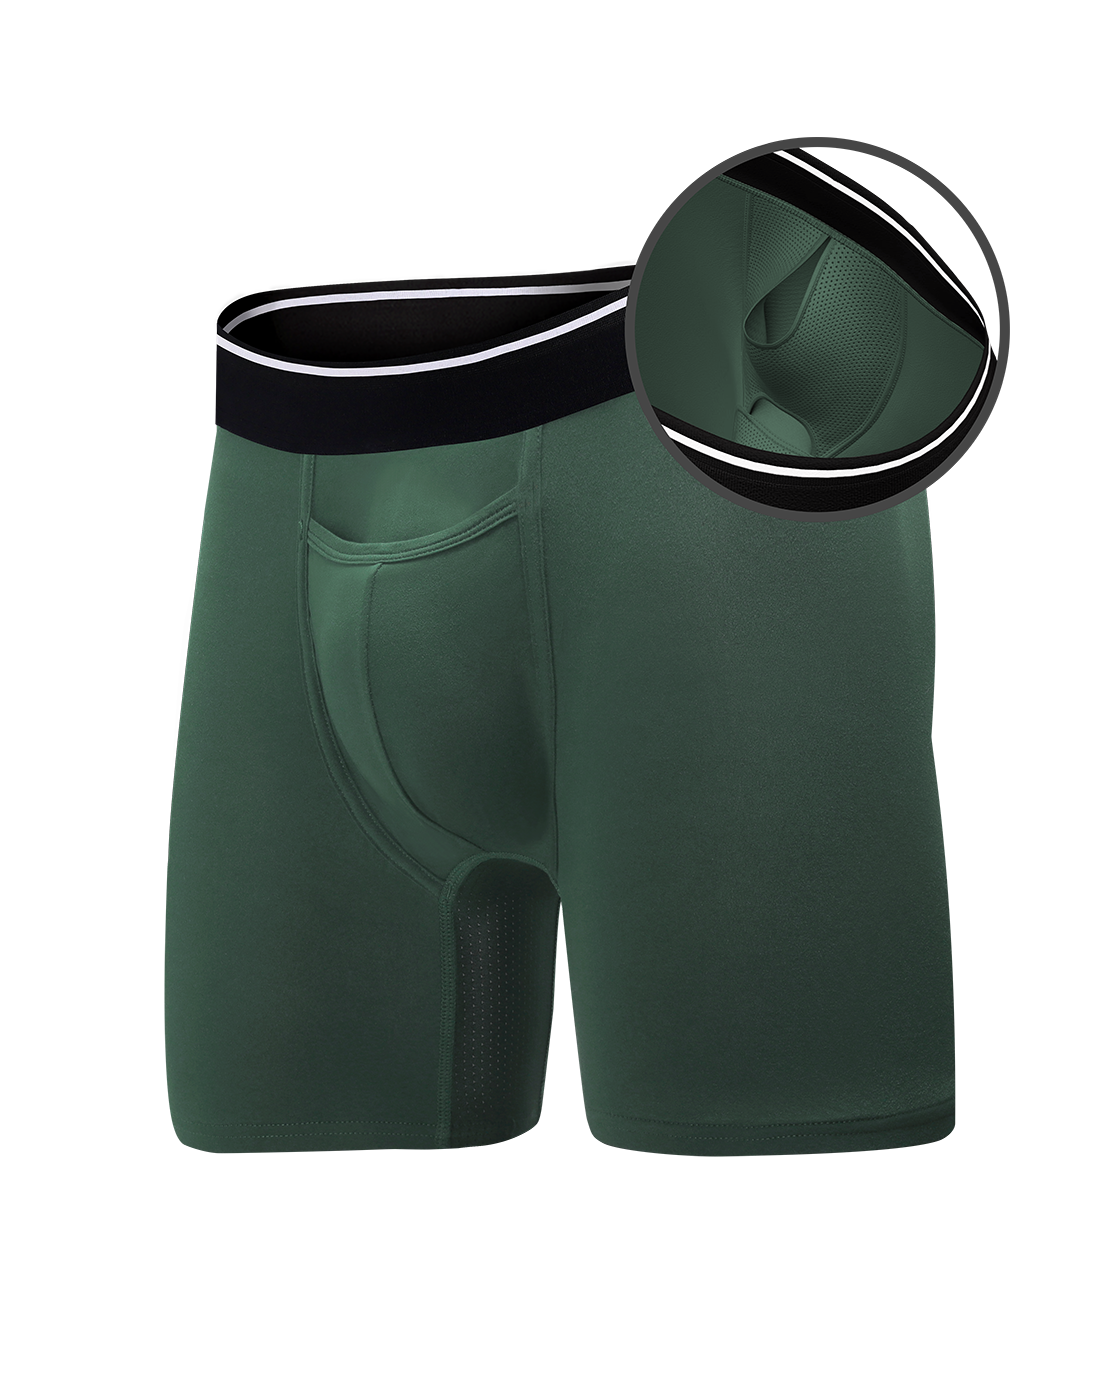 6 Men's Big & Tall USA Classic Design Boxer Briefs Underwear (2XL) Black,  Grey at  Men's Clothing store